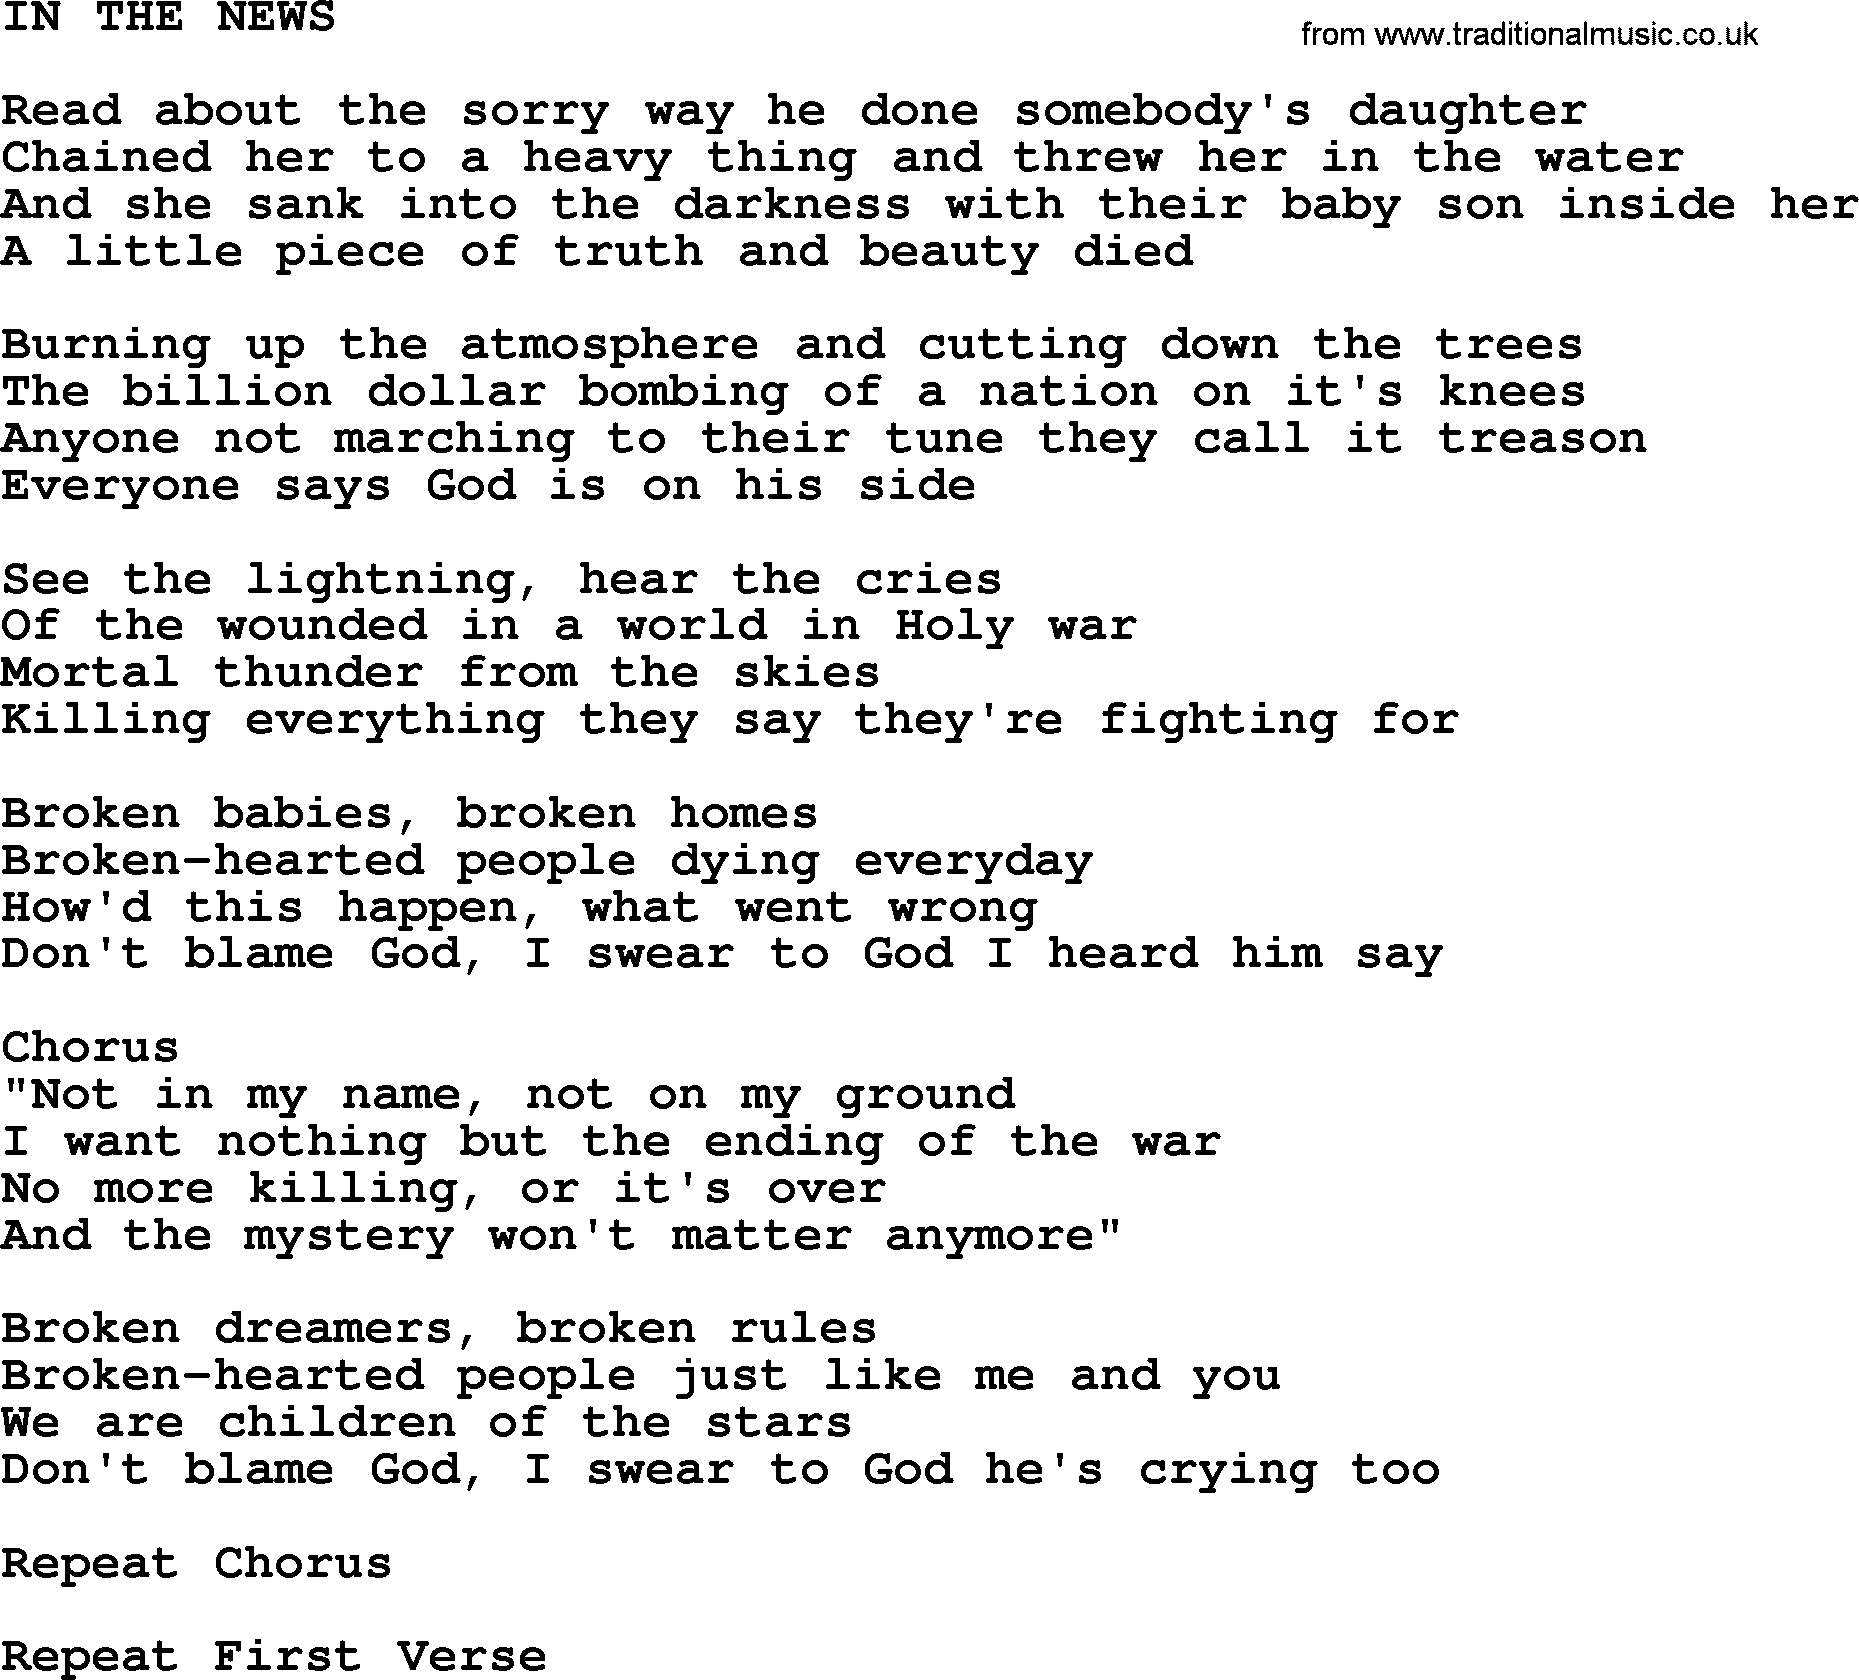 Kris Kristofferson song: In The News lyrics